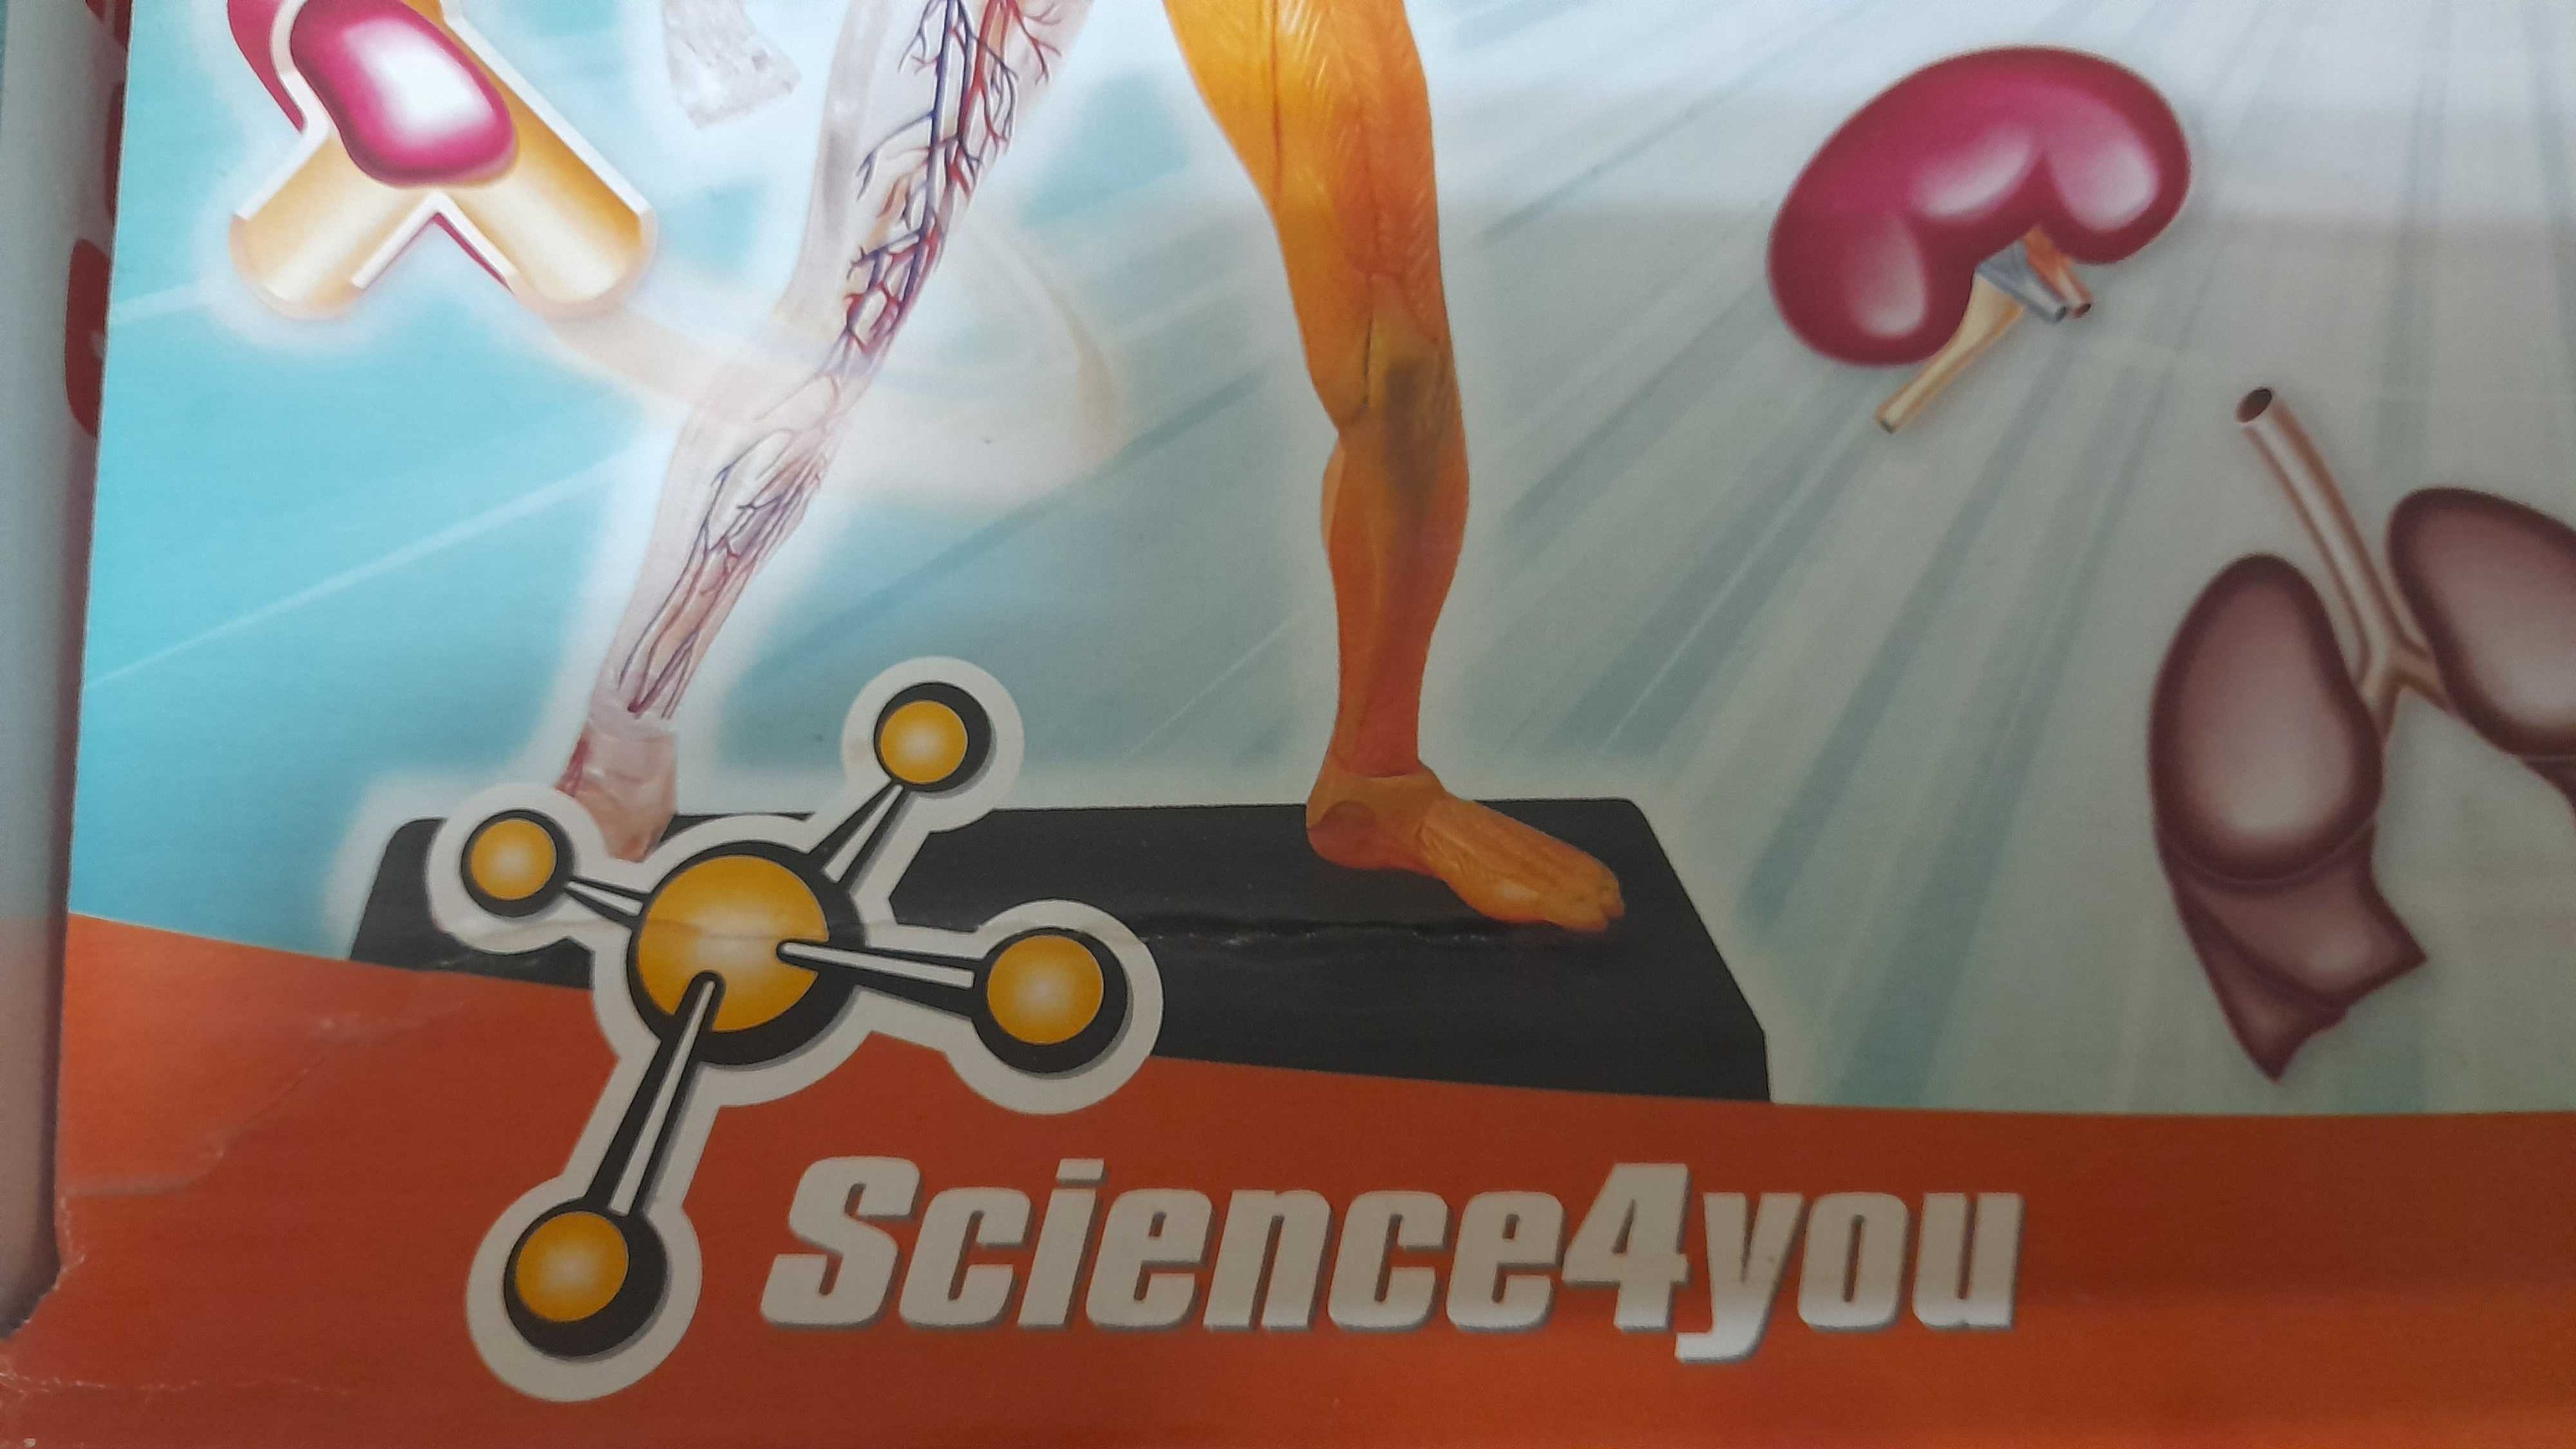 "Corpo Humano" - Science4you